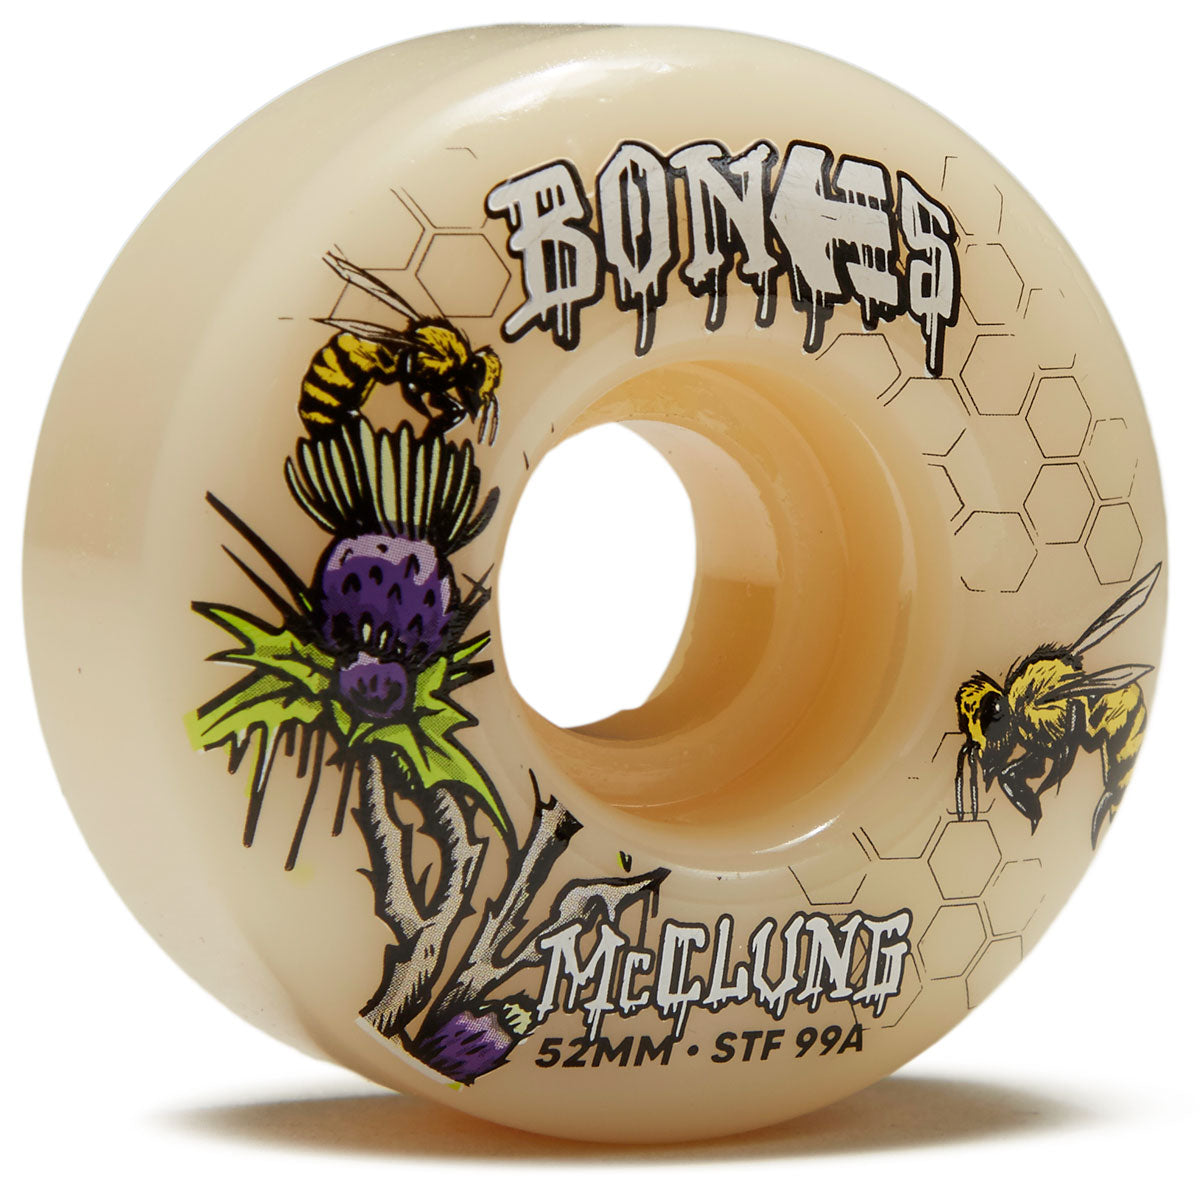 Bones x Etnies Trevor McClung 99A V5 Sidecut Skateboard Wheels - 52mm image 1